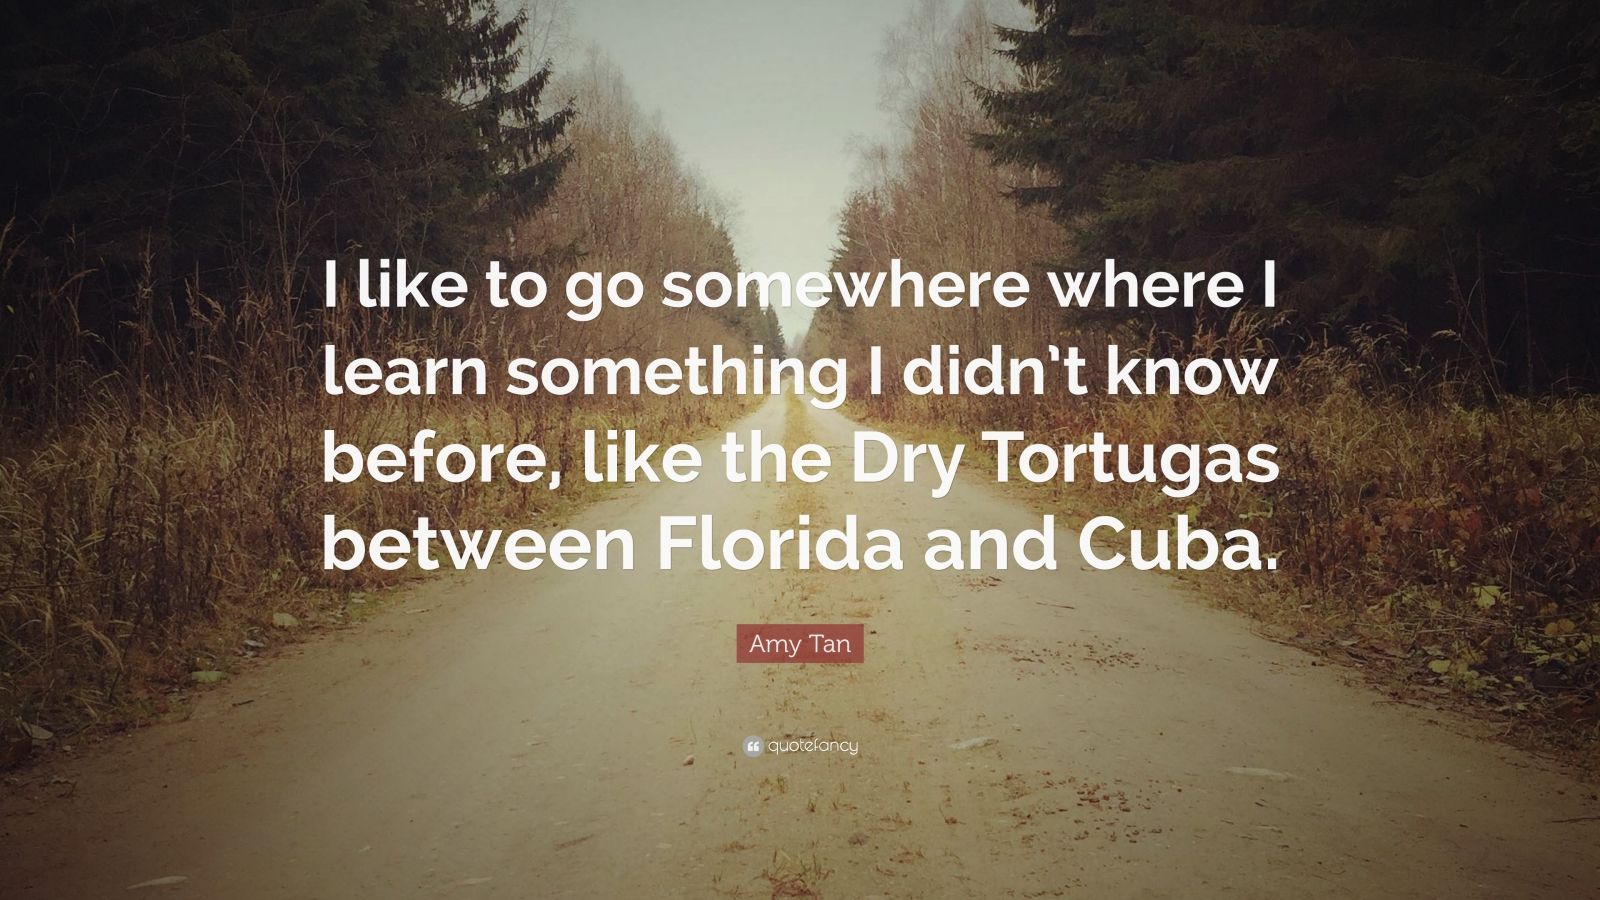 Amy Tan Quote: "I like to go somewhere where I learn ...